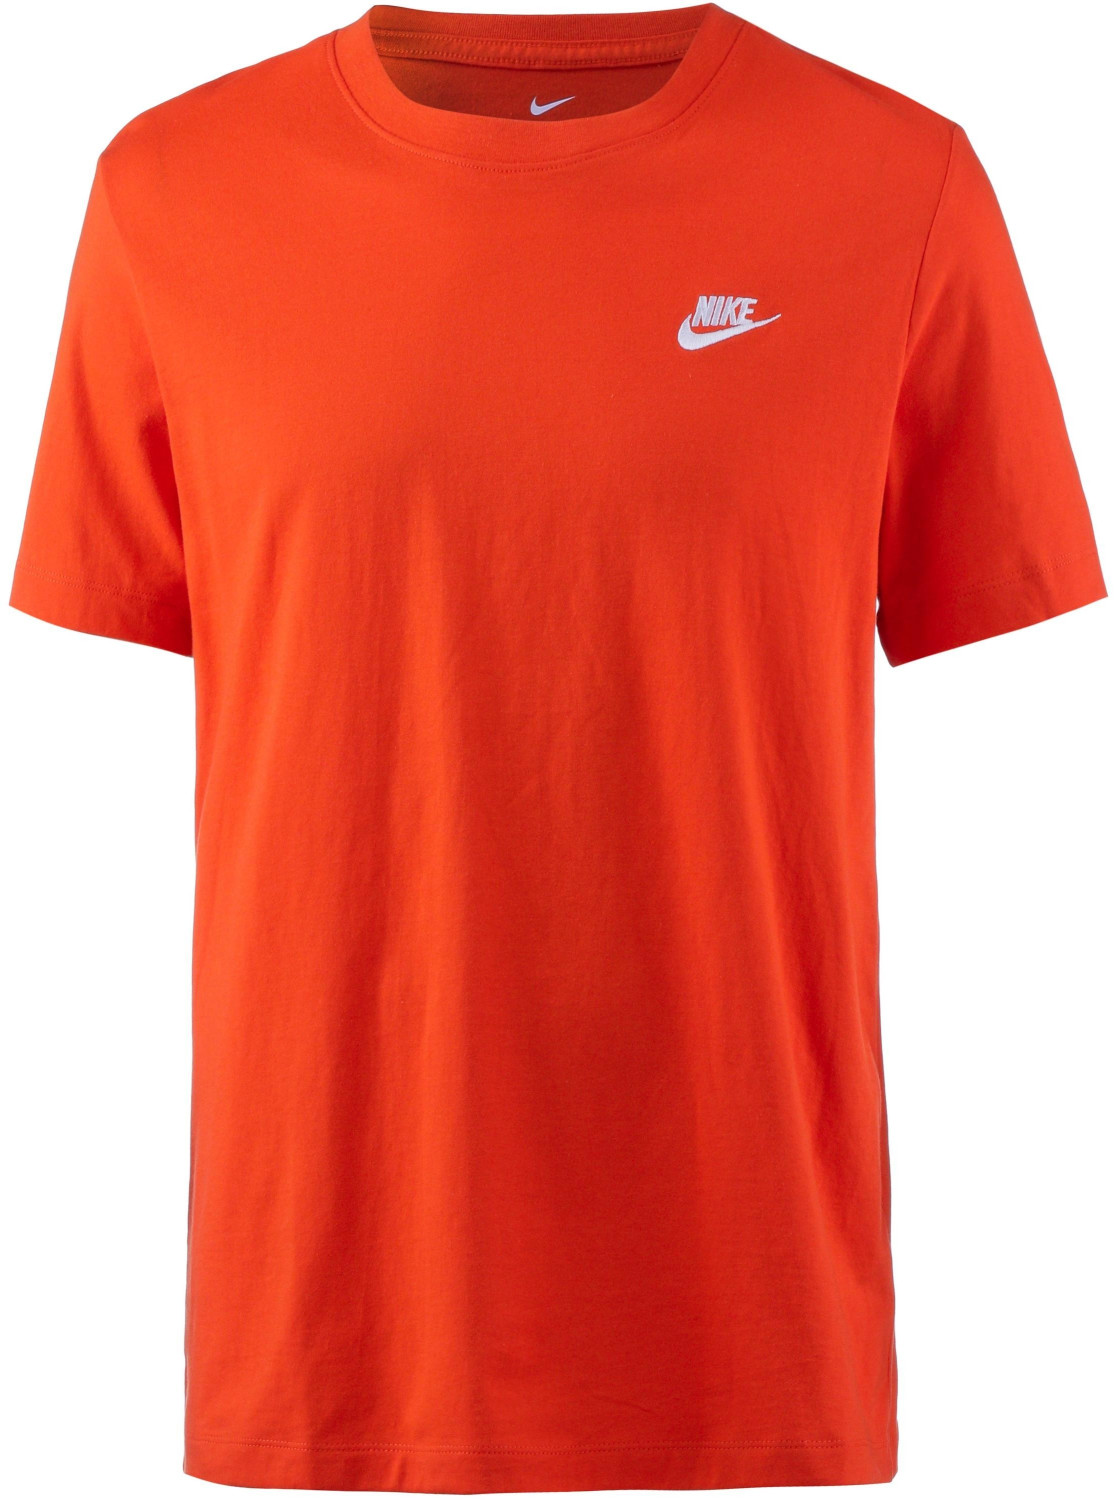 Nike Sportswear Club orange/white